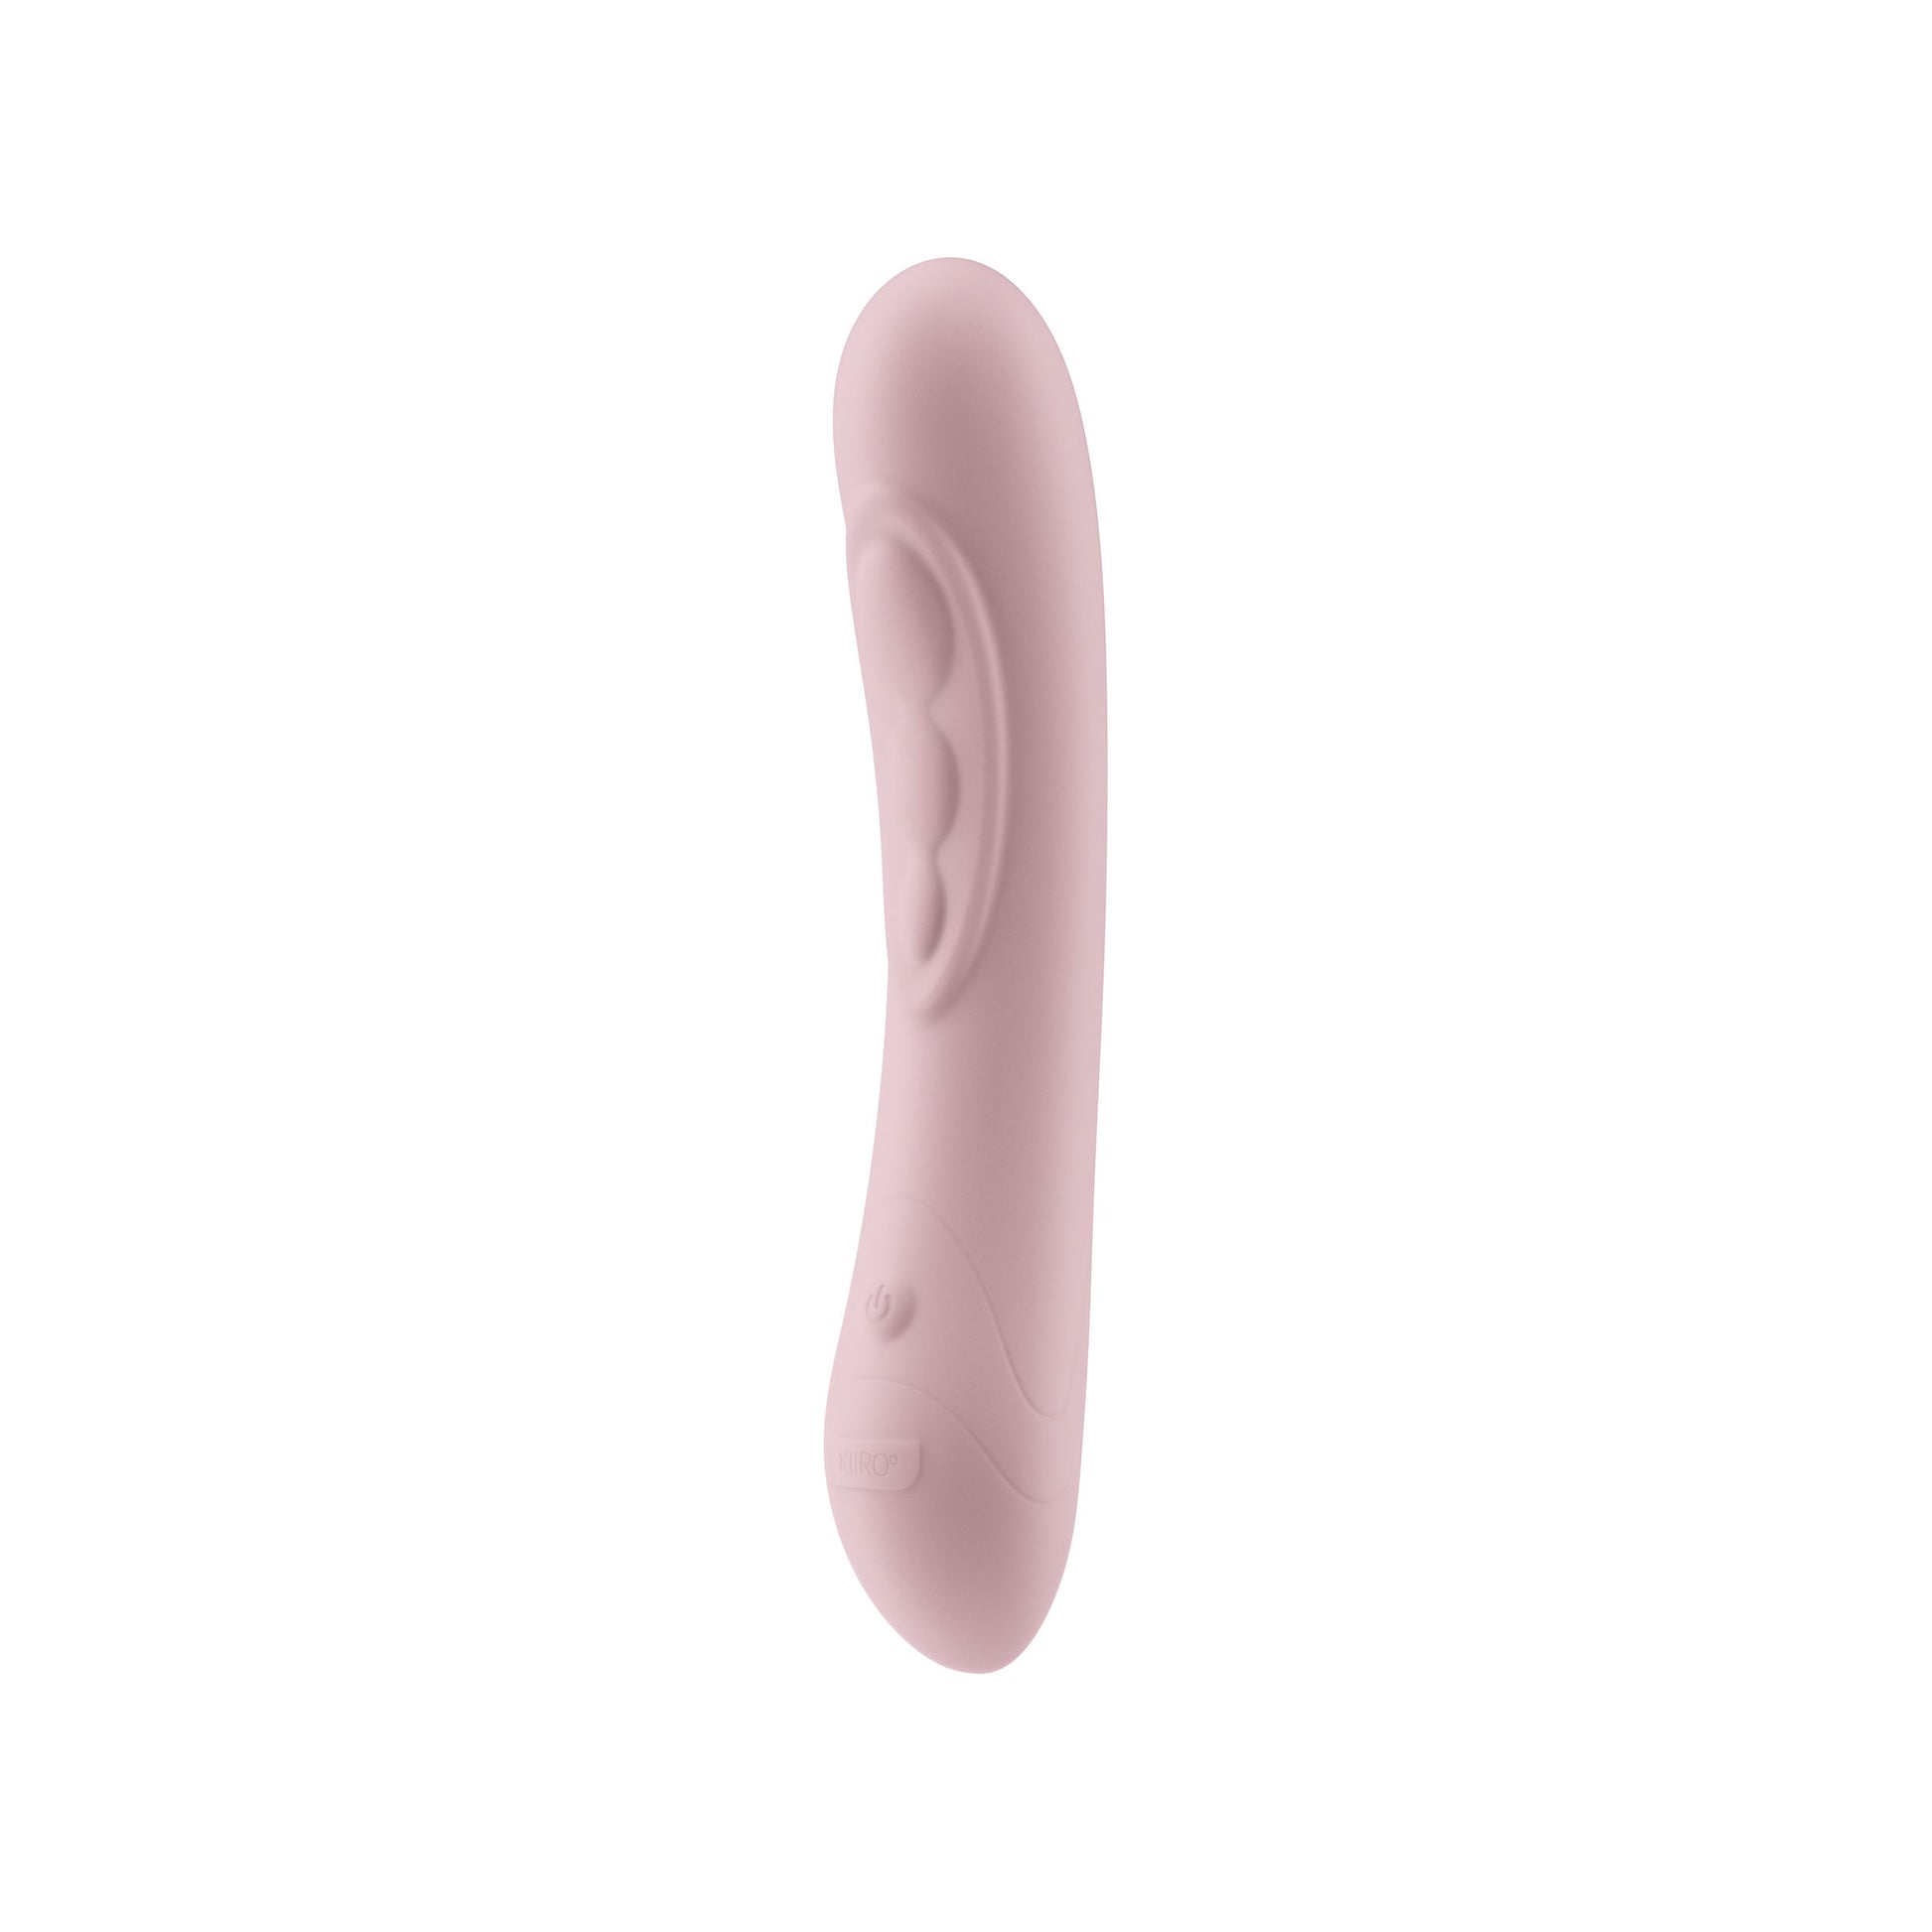 The pink Kiiroo Pearl3 G-Spot Vibrator.